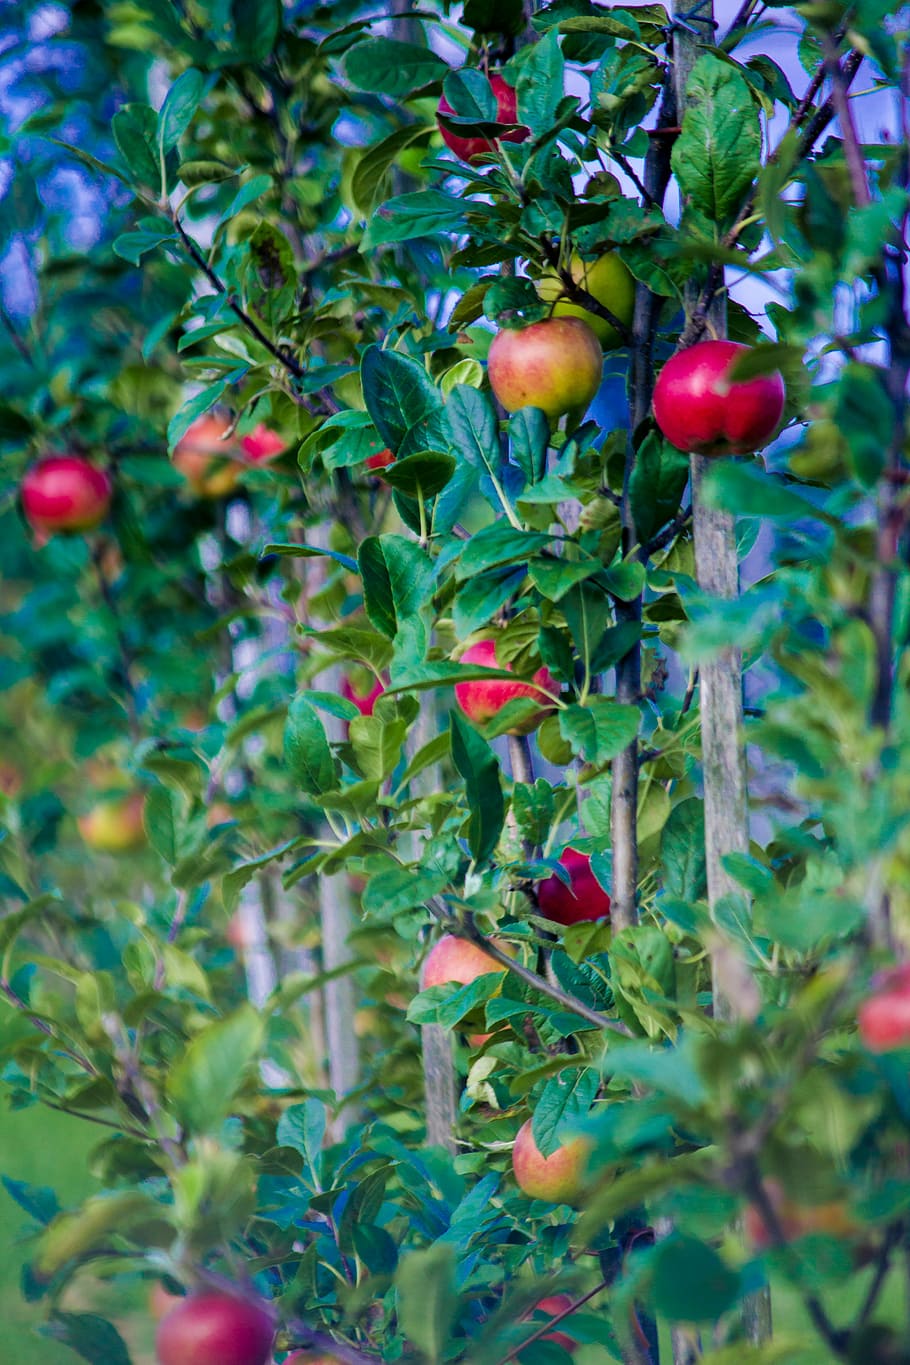 selectivo, fotografía de enfoque, manzano, otoño, manzana, fruta, frisch, recoger, naturaleza, árbol frutal